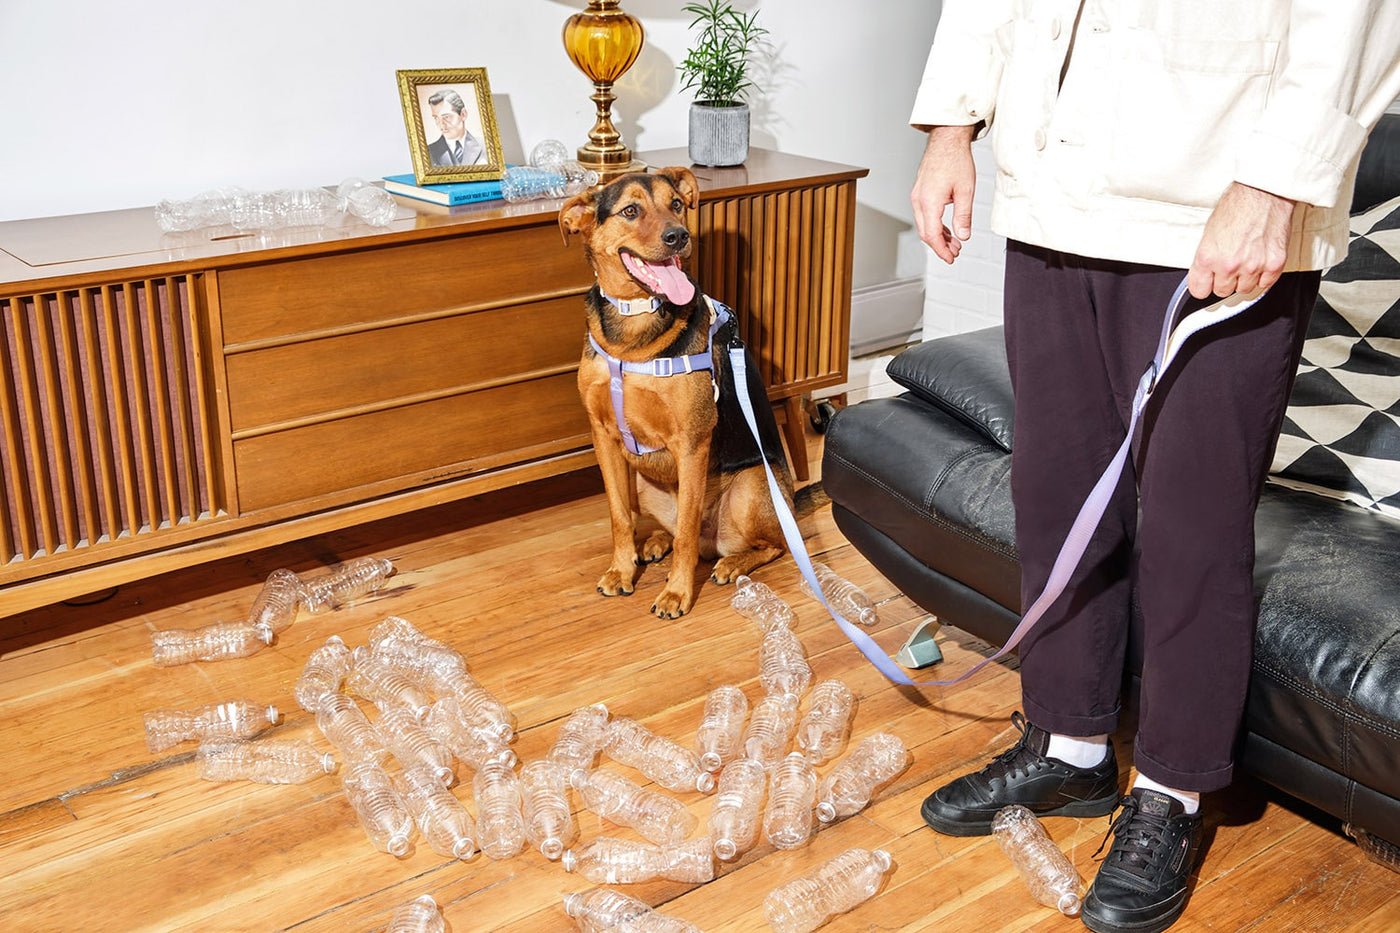 Dog on blue dog leash surrounded by plastic bottles